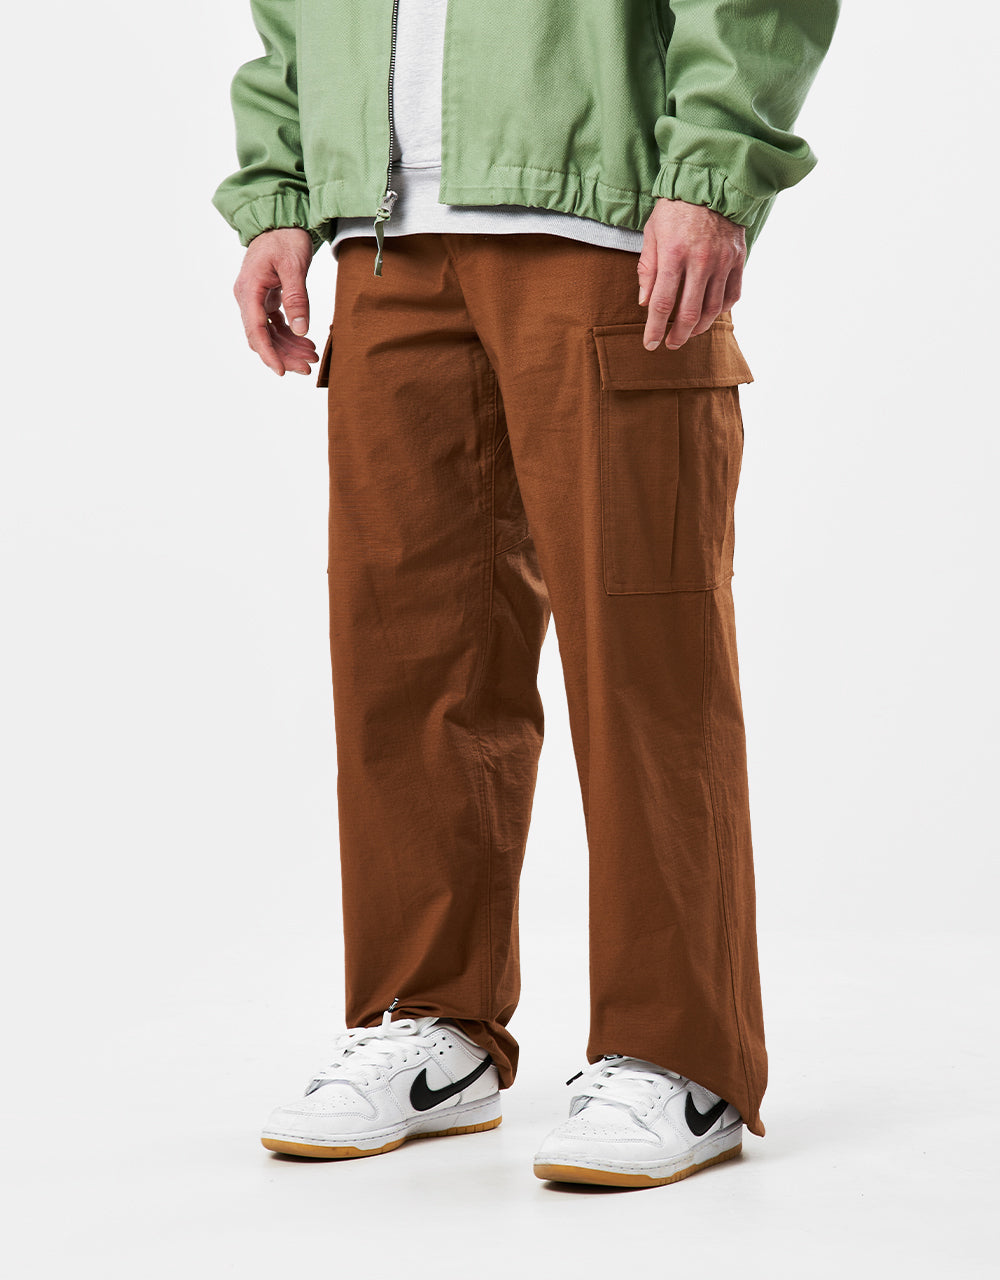 Nike SB Kearny Cargo Pant - Light British Tan